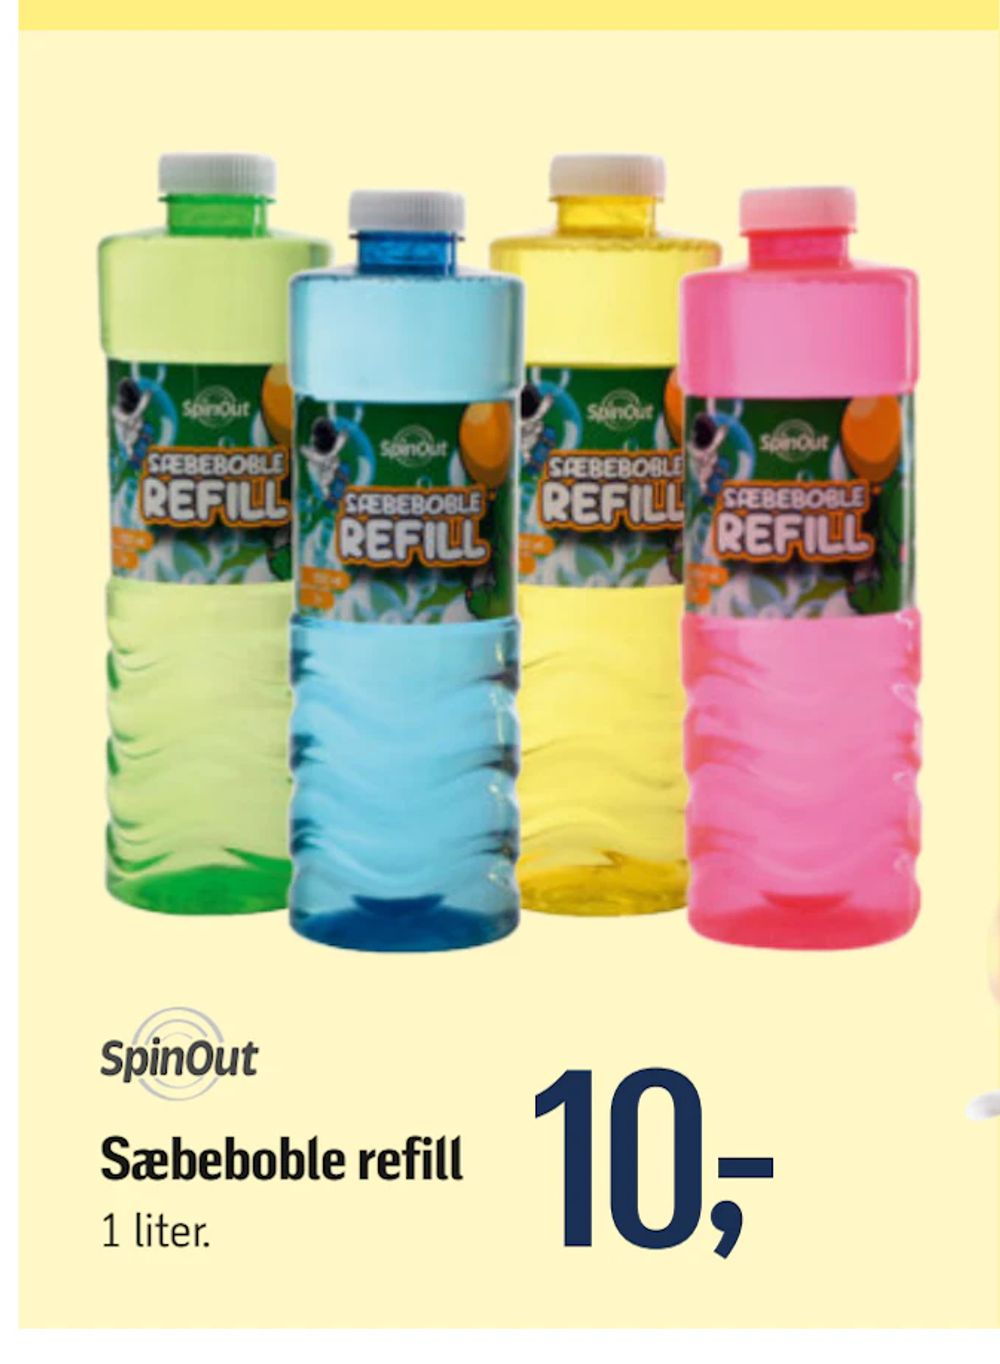 Tilbud på Sæbeboble refill fra føtex til 10 kr.